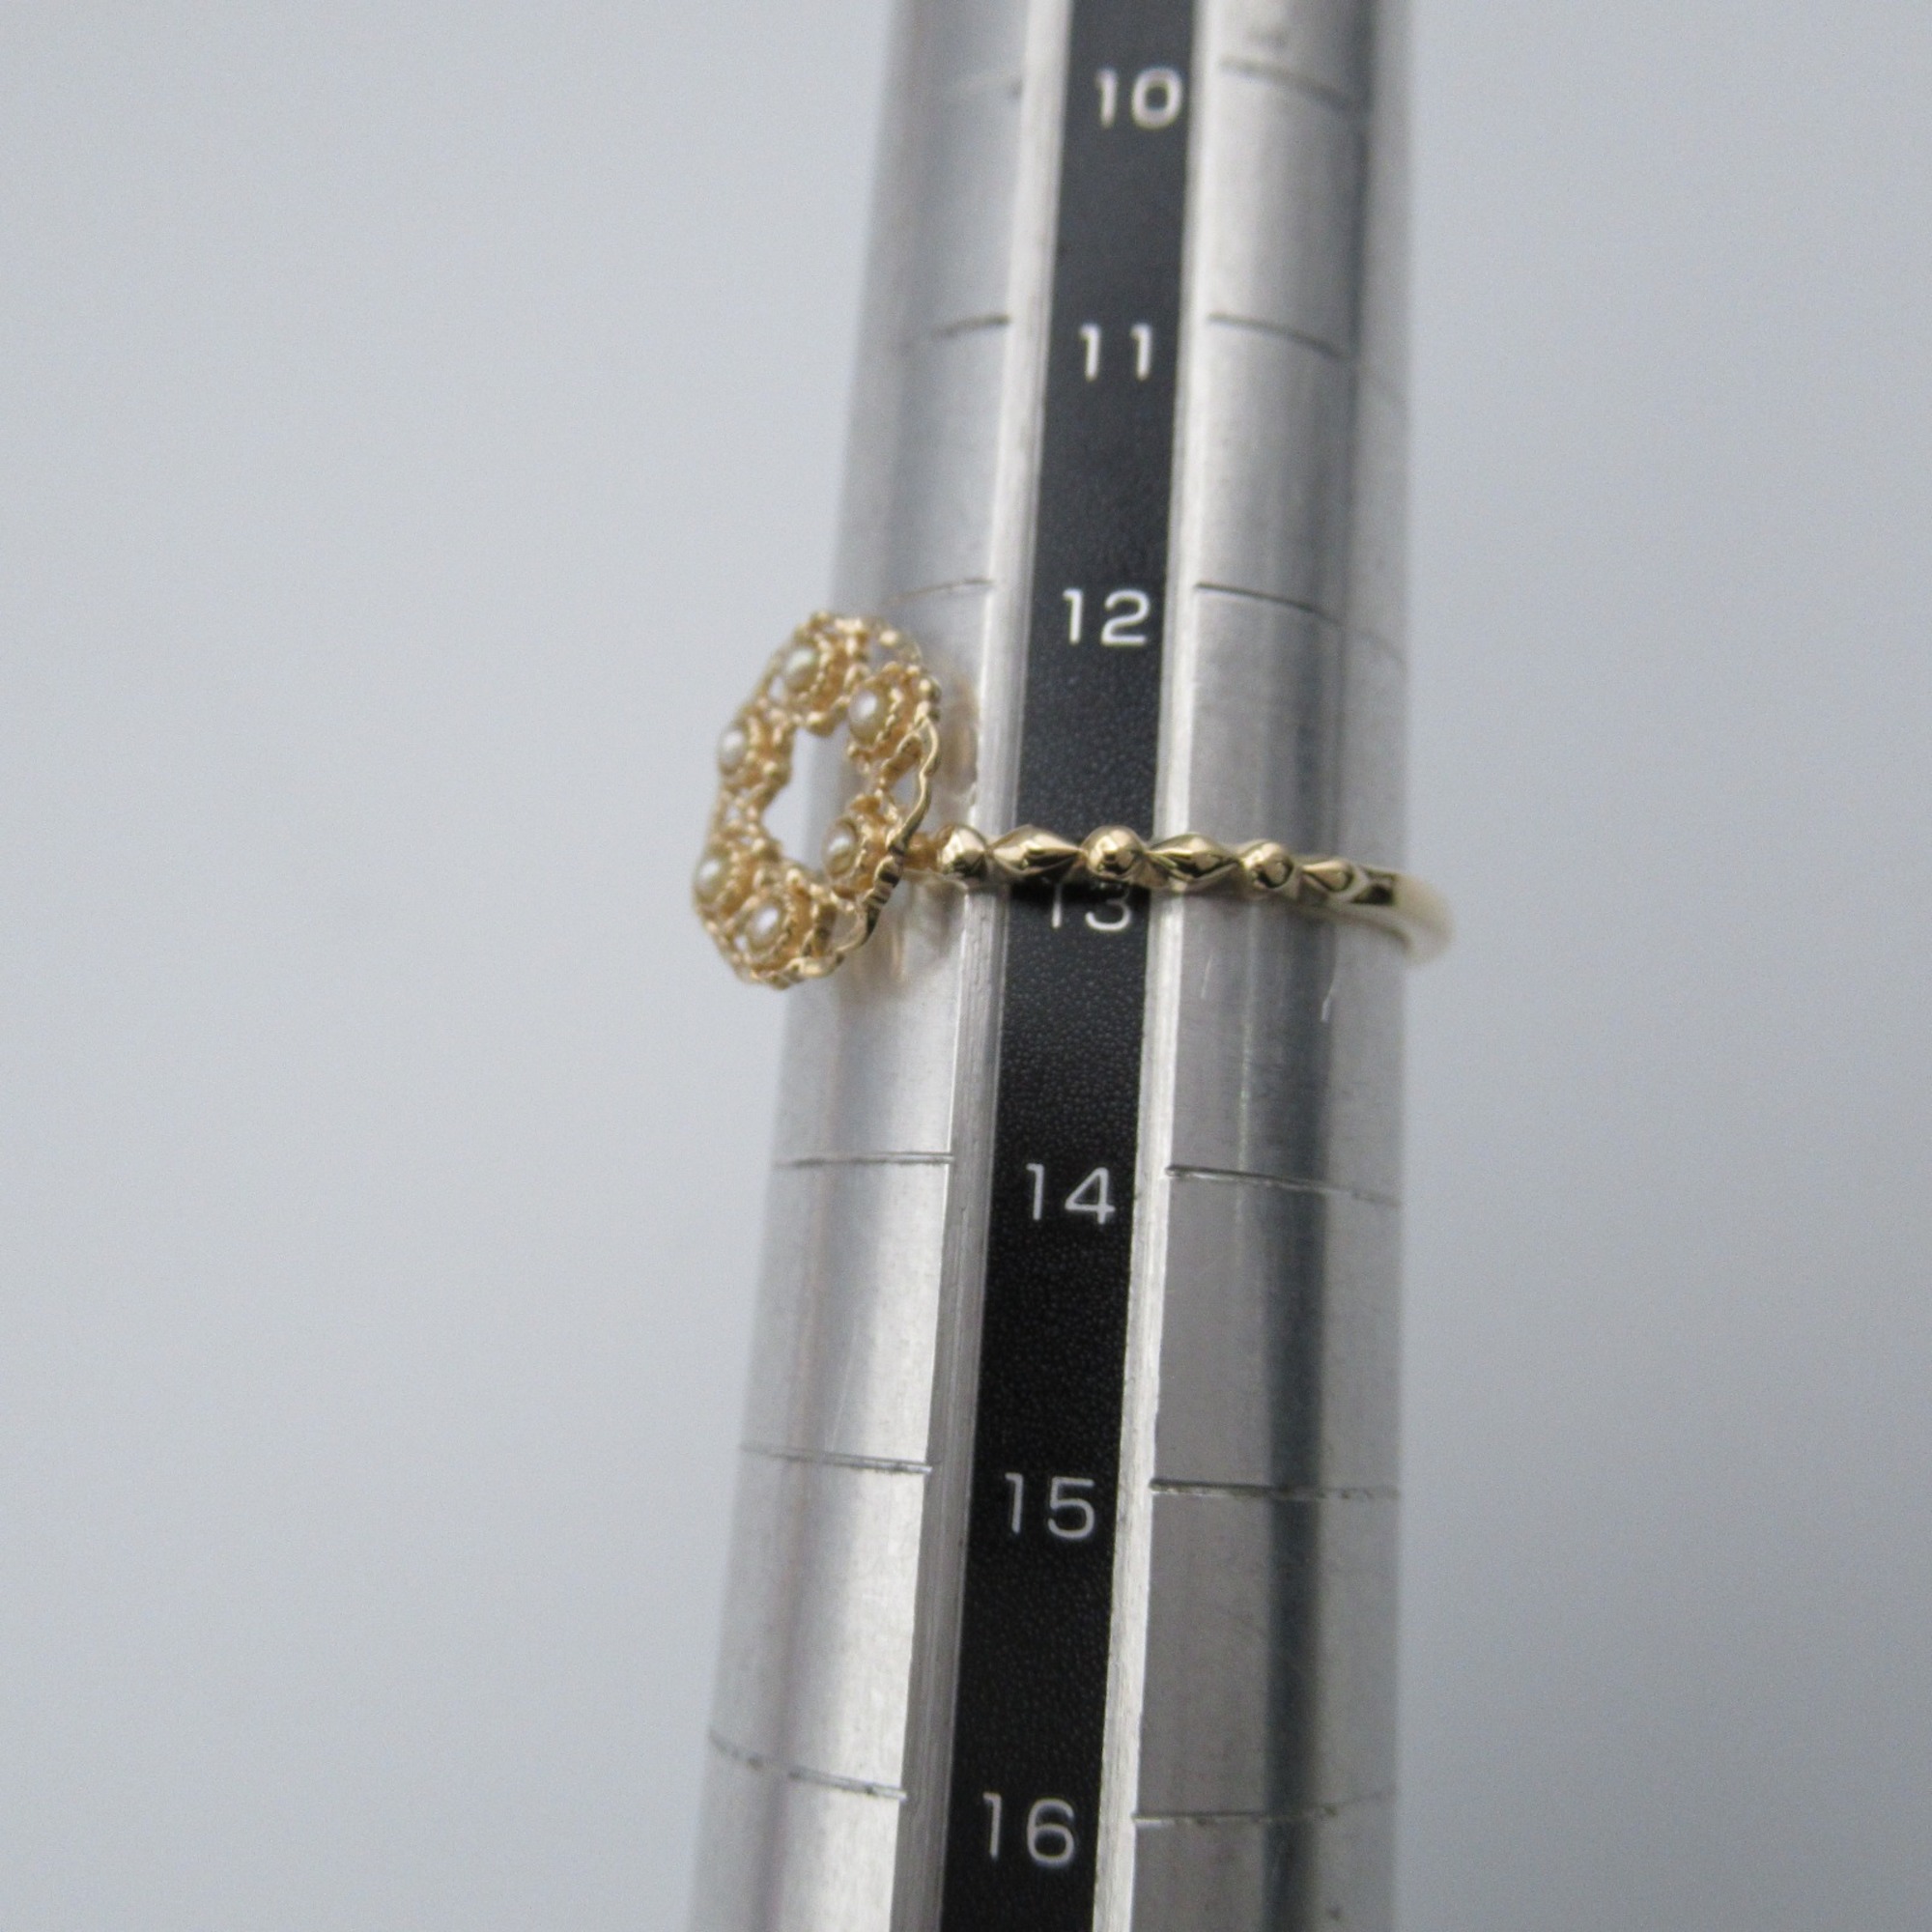 NOJESS Pearl ring Ring Gold  Pearl /K10YG Gold